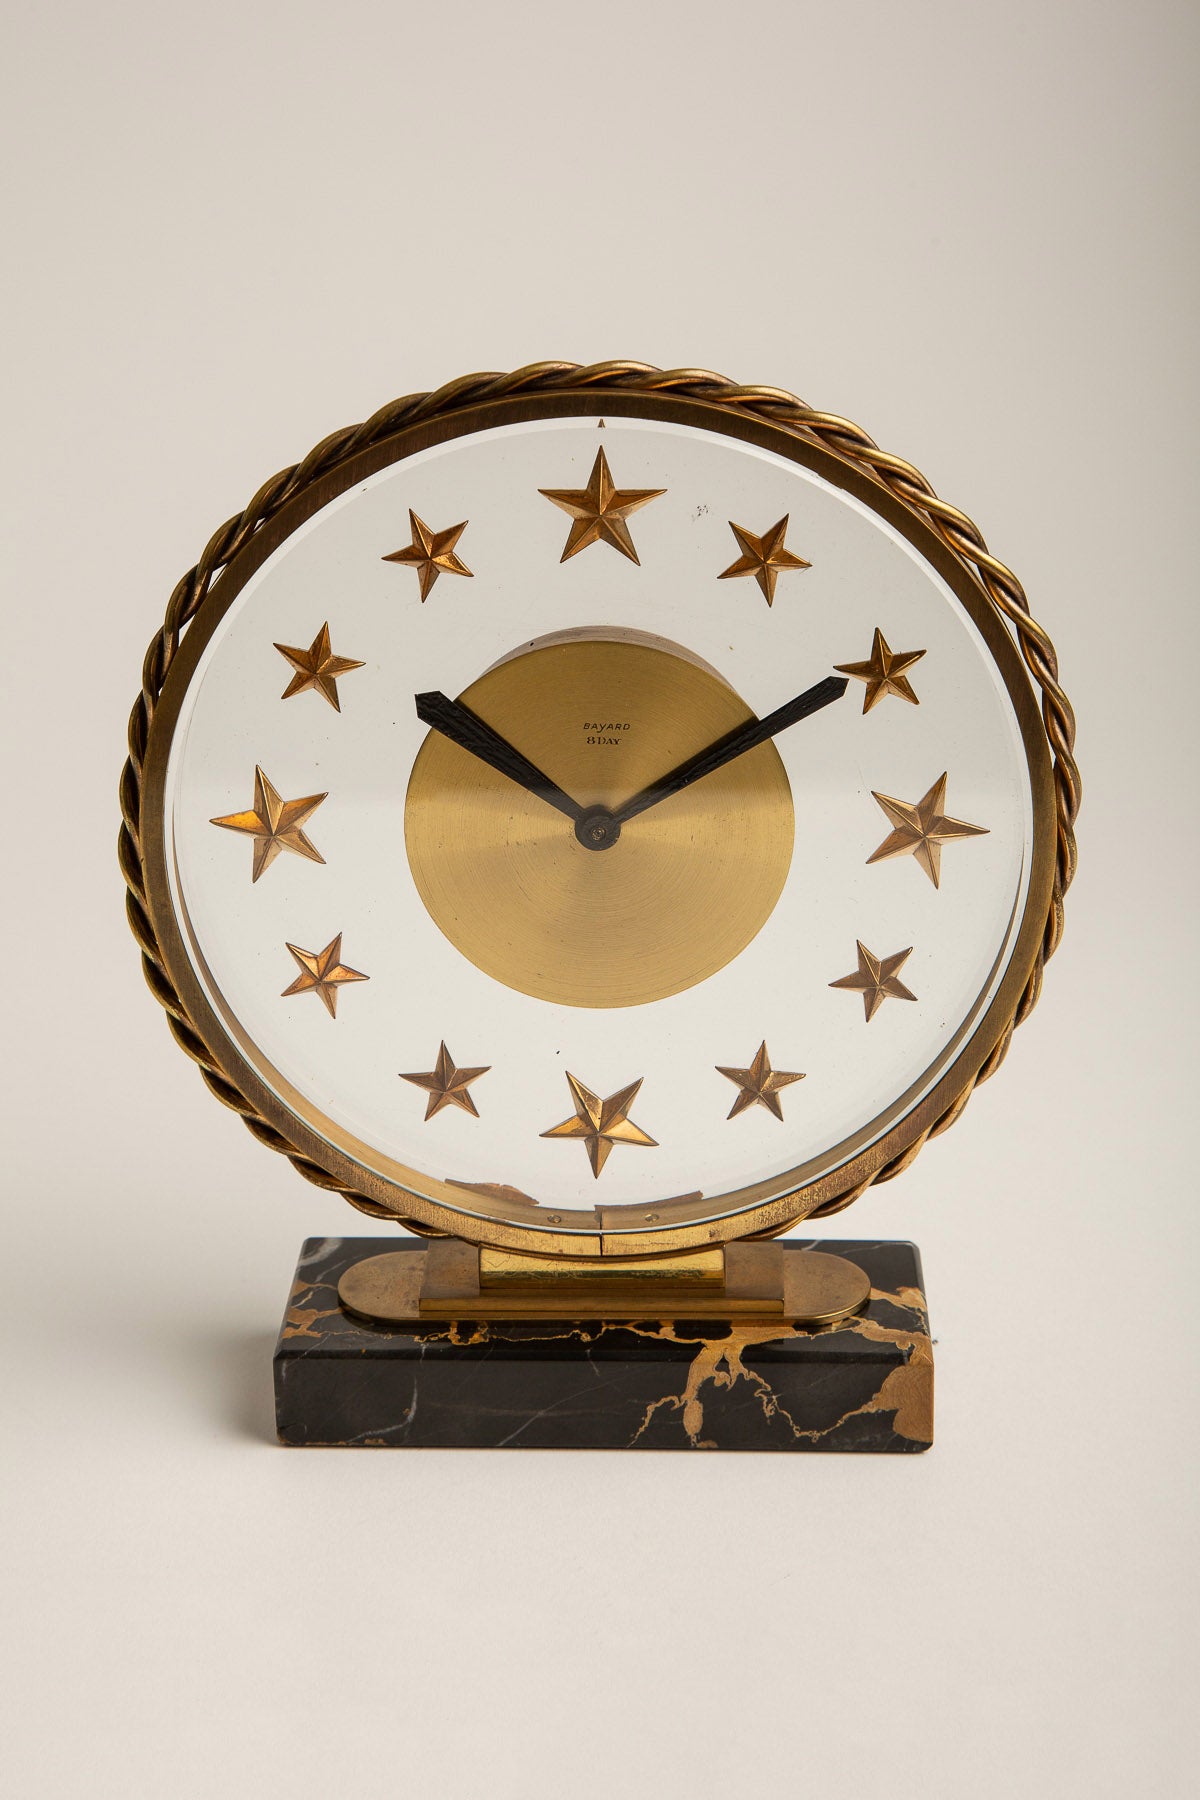 JAEGER-LECOULTRE | VINTAGE BAYARD 1930'S ART DECO CLOCK